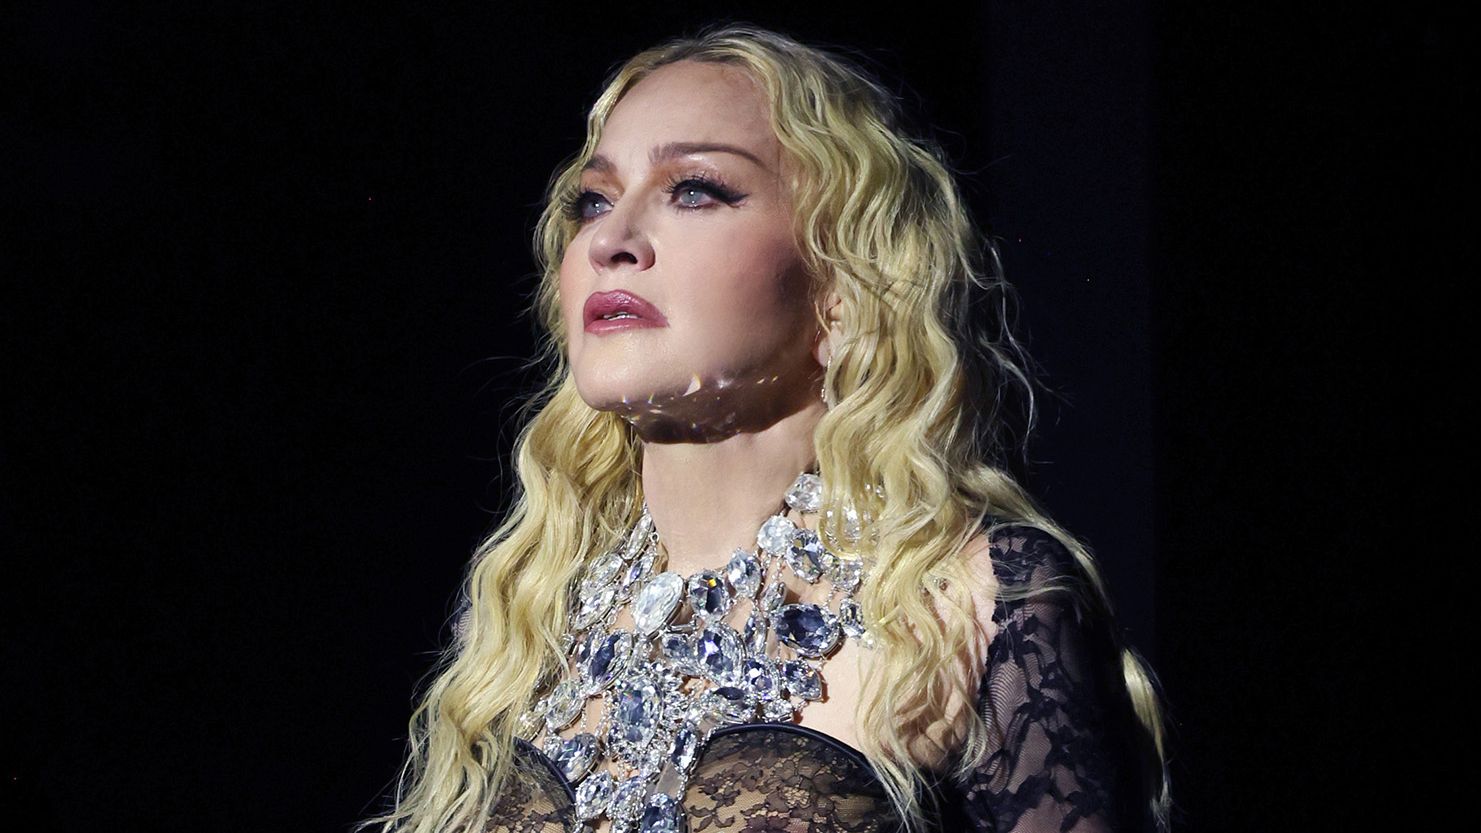 madonna cone bra - Google Search  90s female singers, Madonna, Madonna  fashion